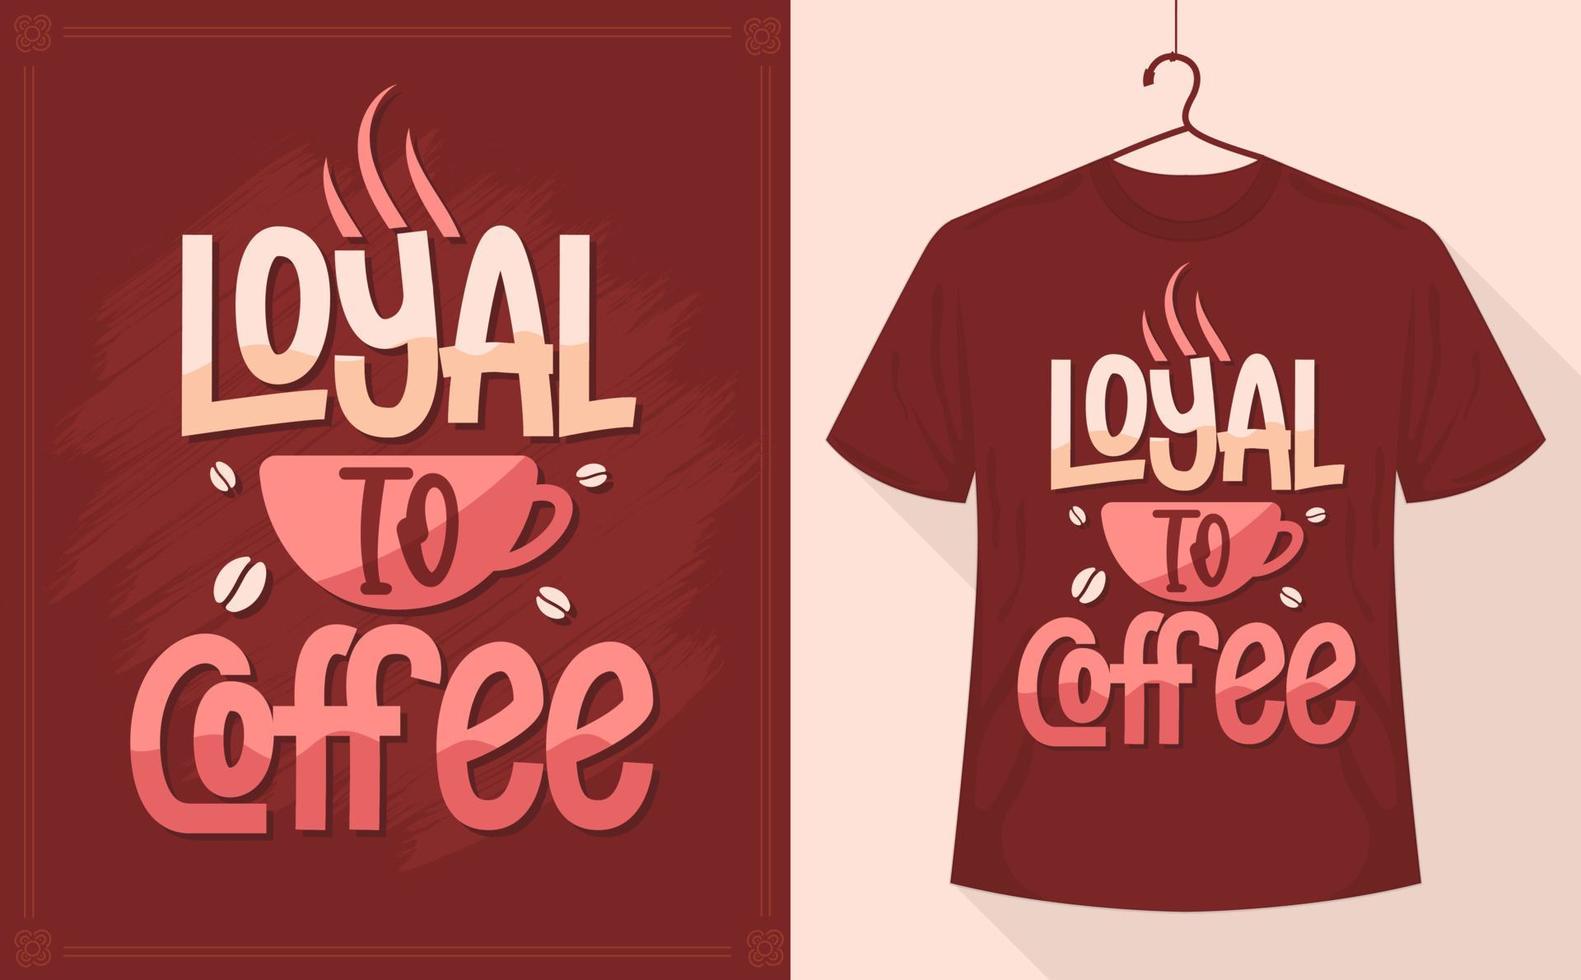 Loyal to Coffee - Kaffee-Zitat-T-Shirt-Design vektor